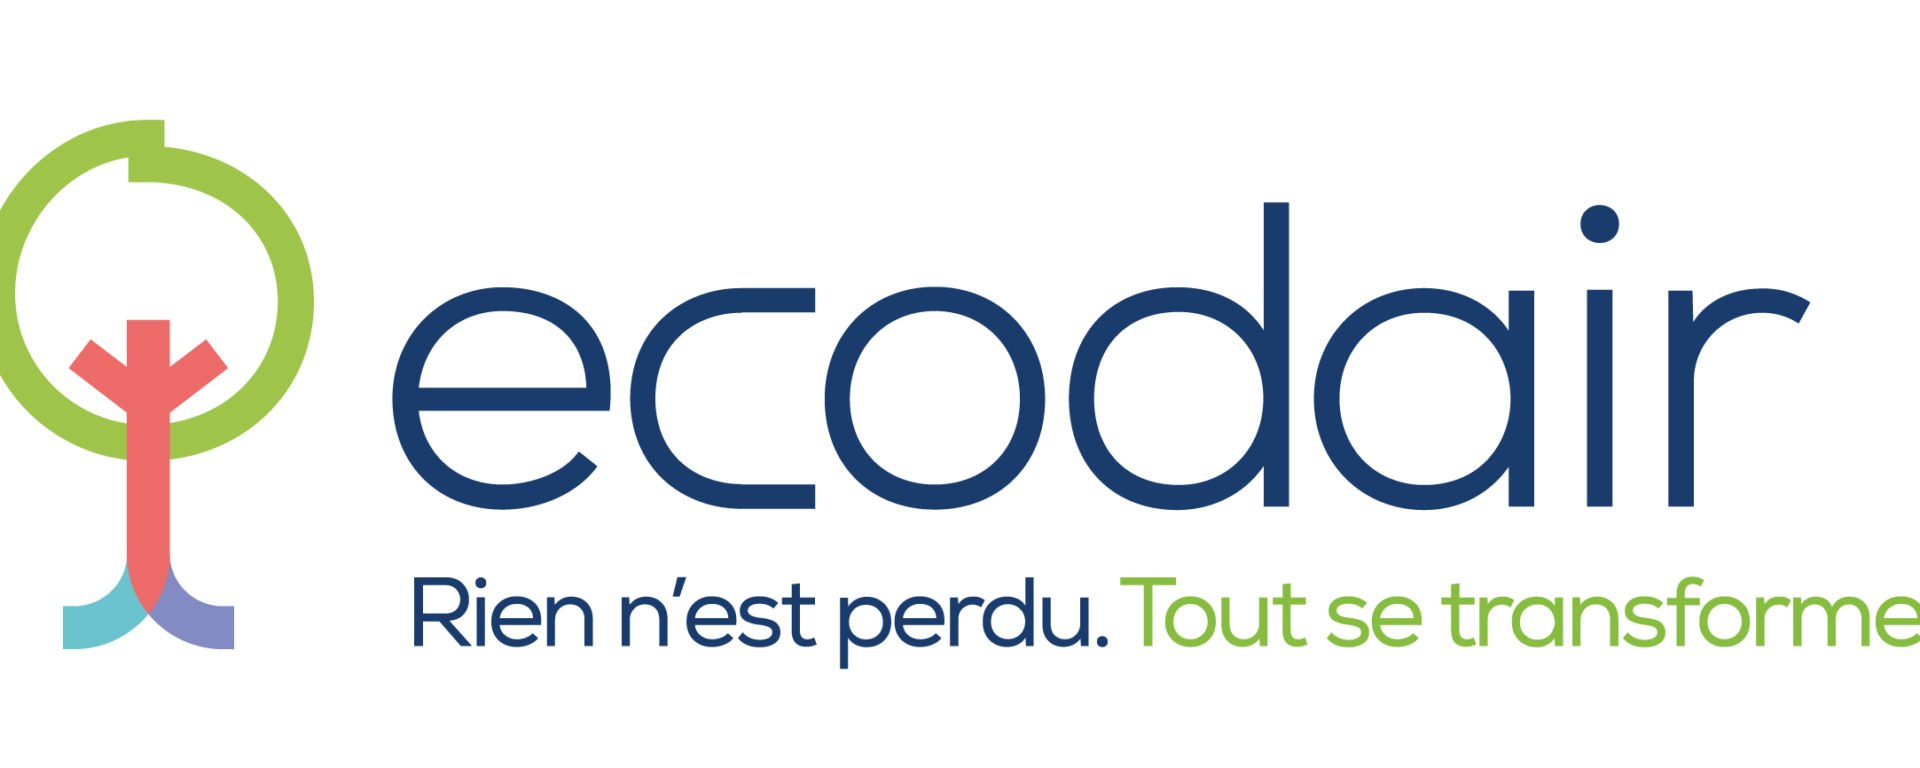 Ecodair-Logo principalement vert et bleu avec un petit dessin en forme d'arbre horizontal